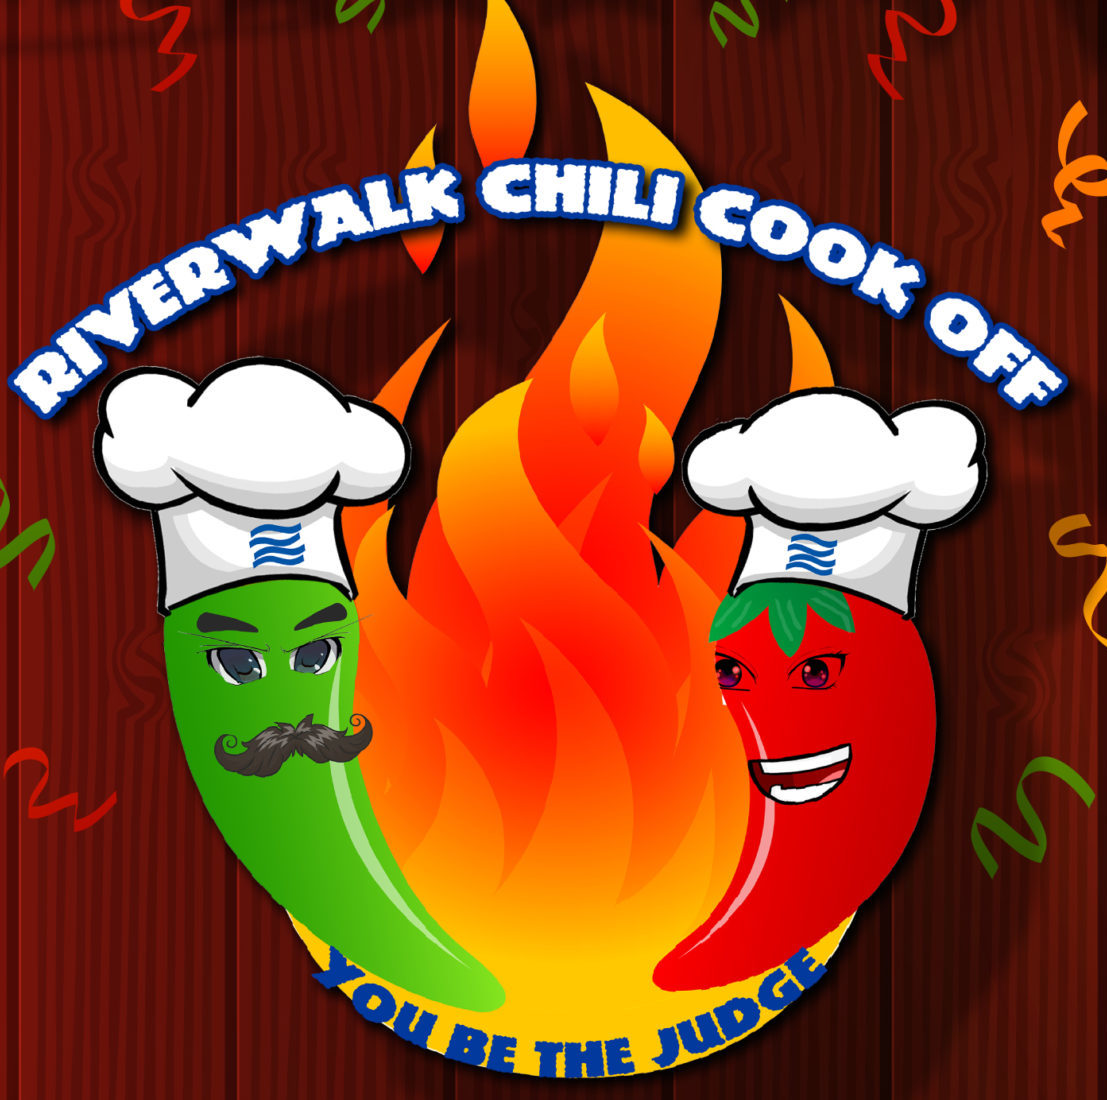 6th Annual Riverwalk Chili Cook Off